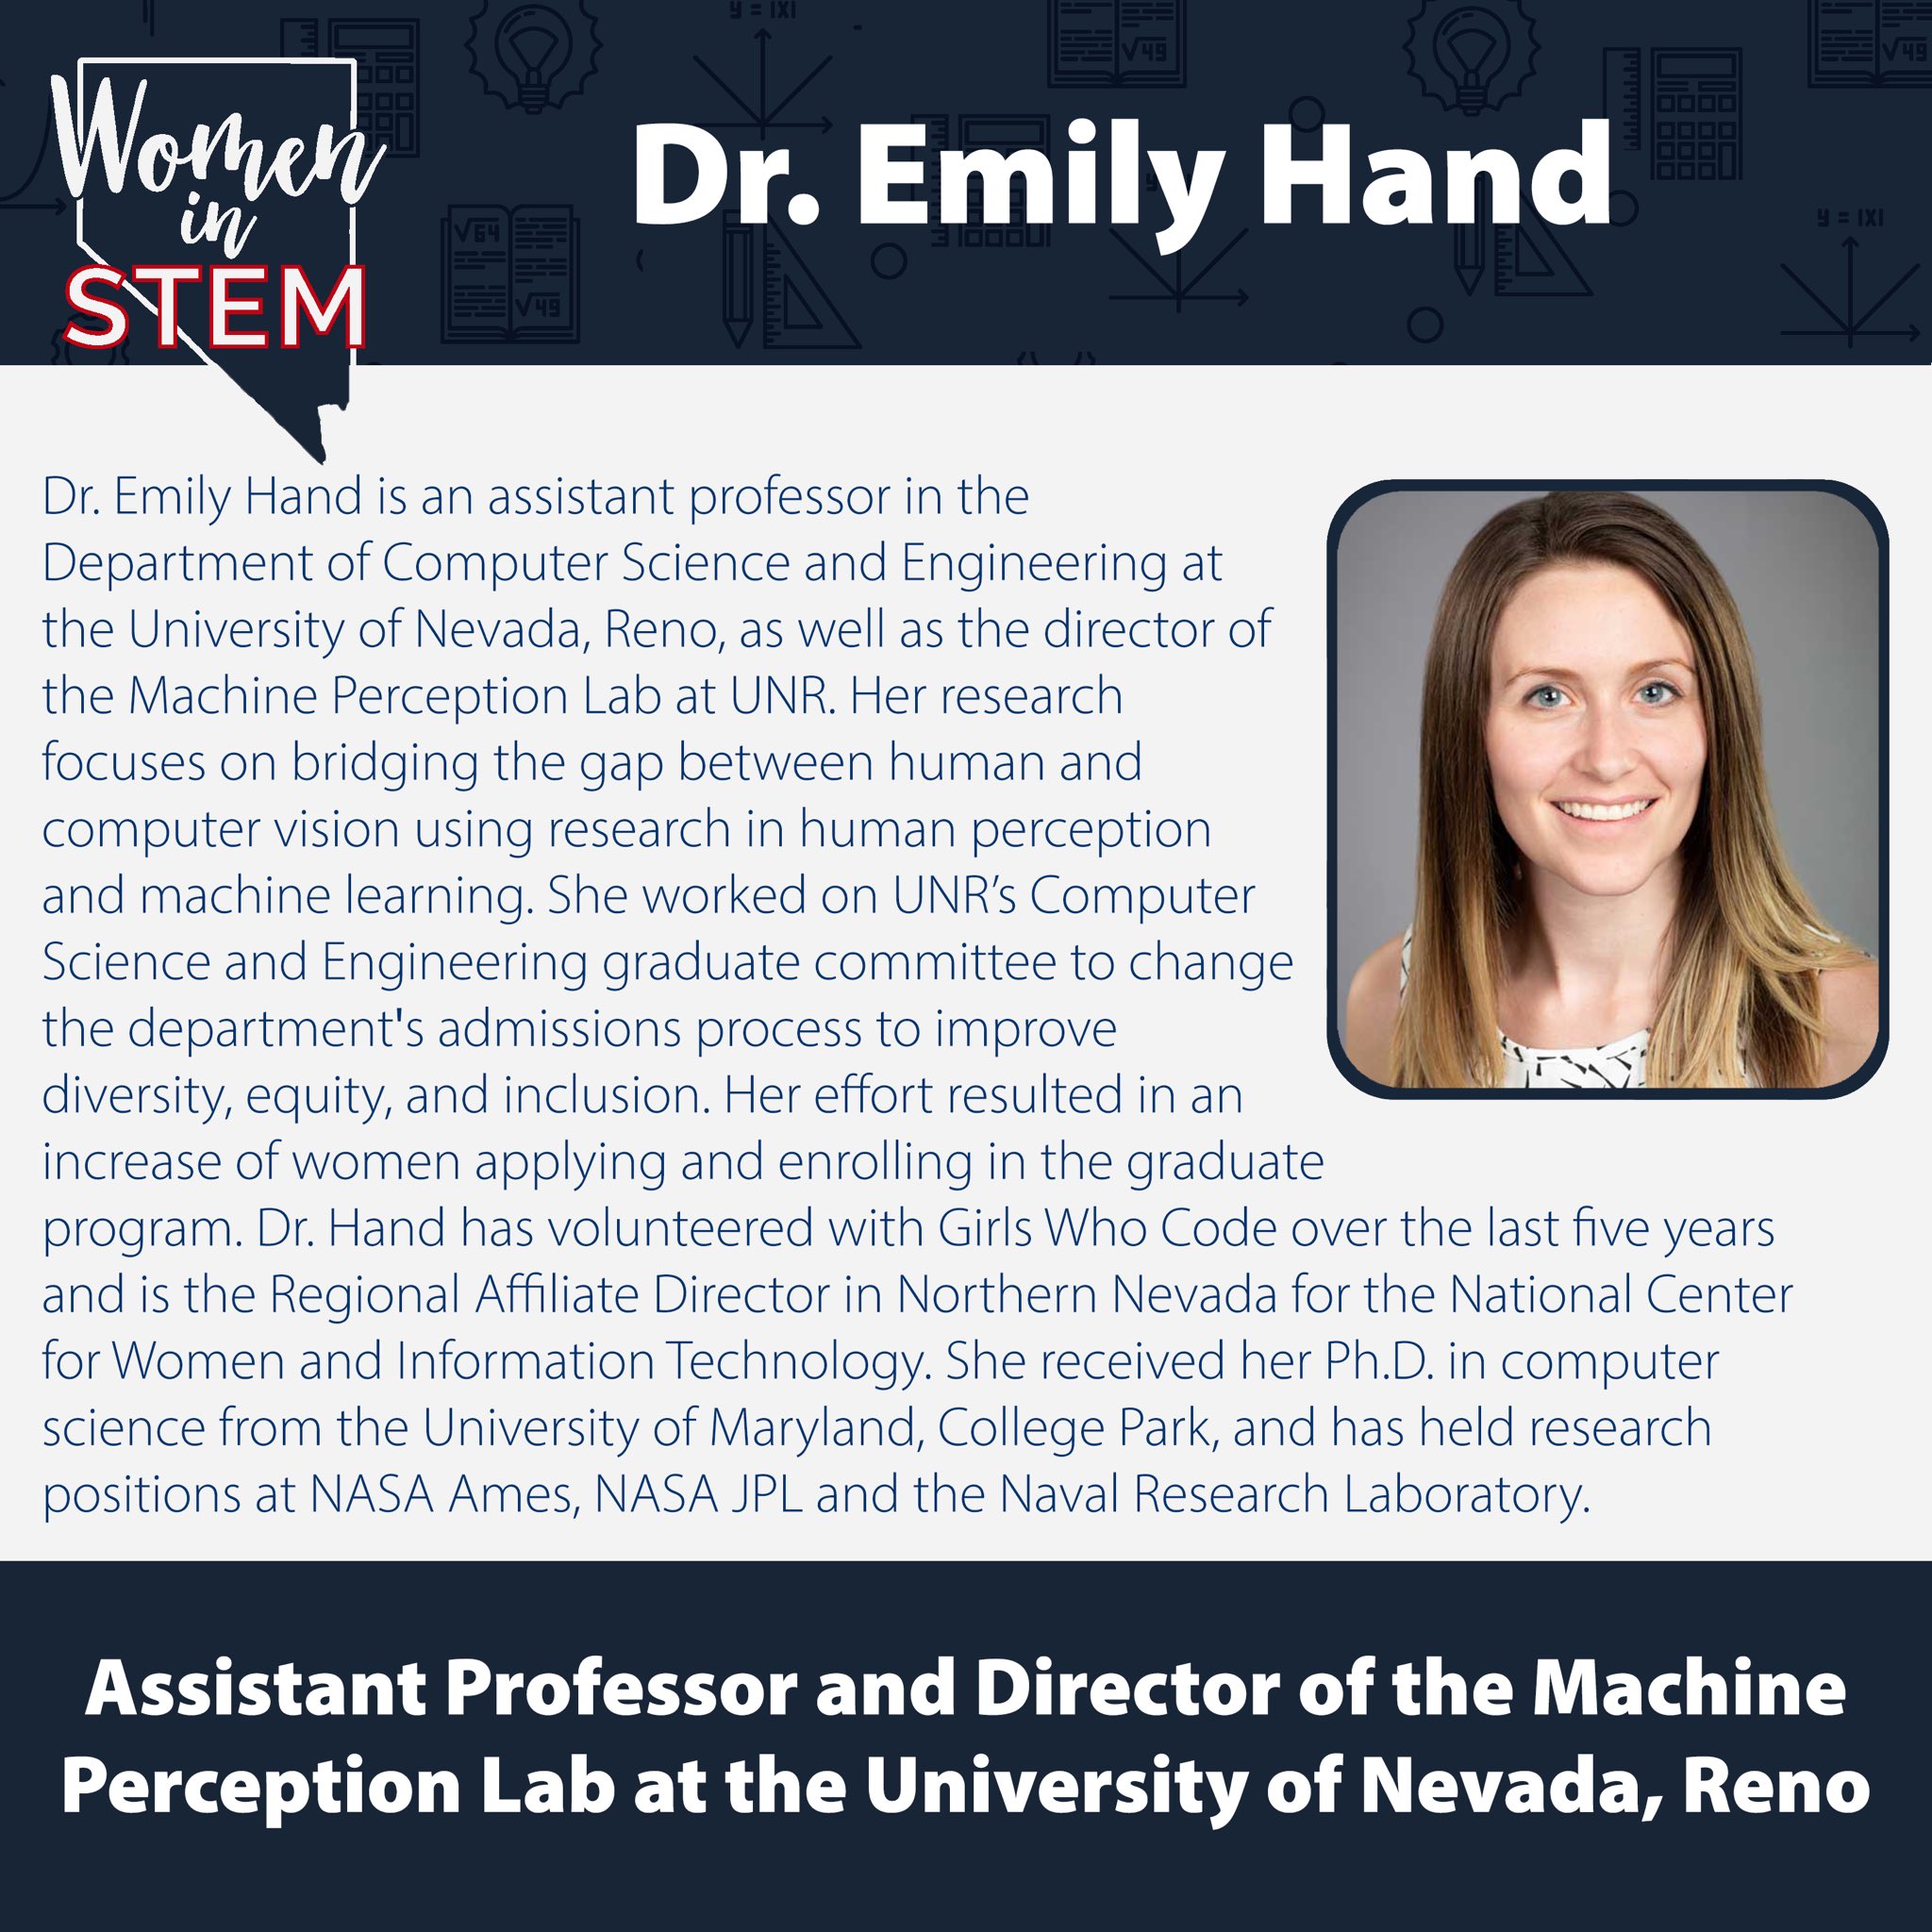 Dr. Emily Hand